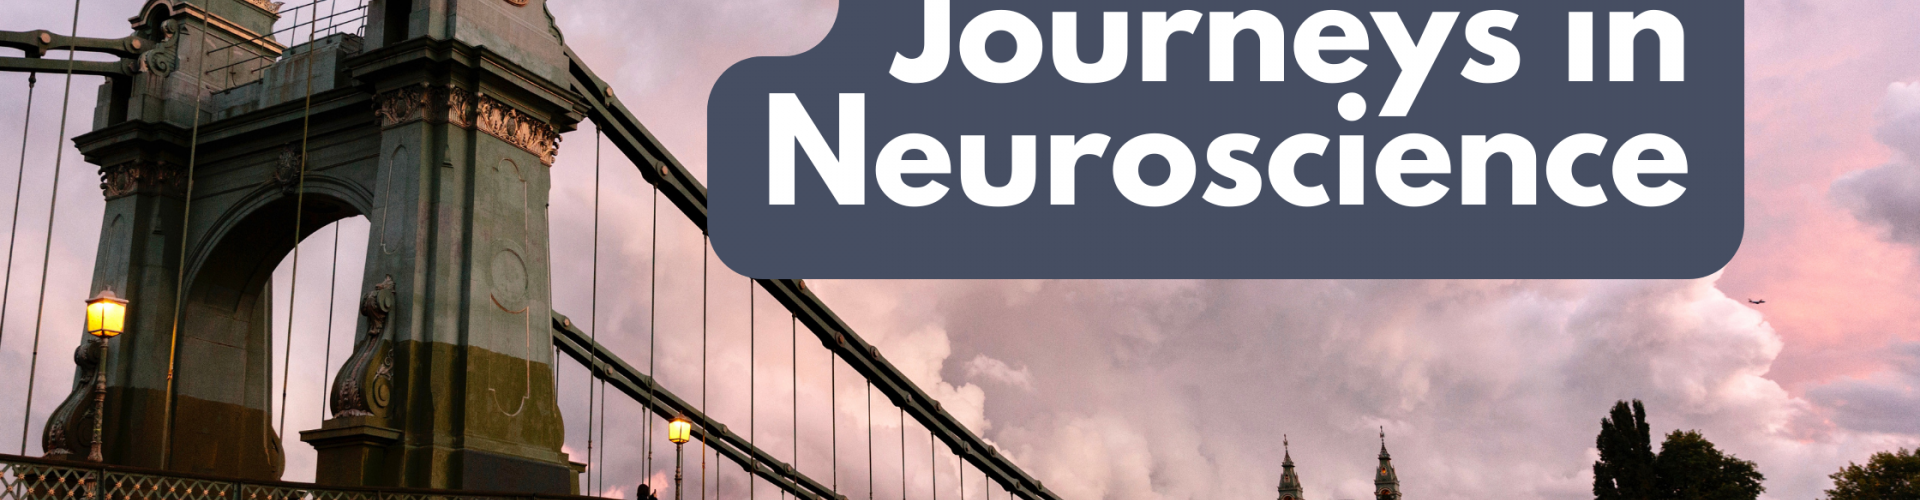 Journeys in Neuroscience Blog Banner - Andy Murray